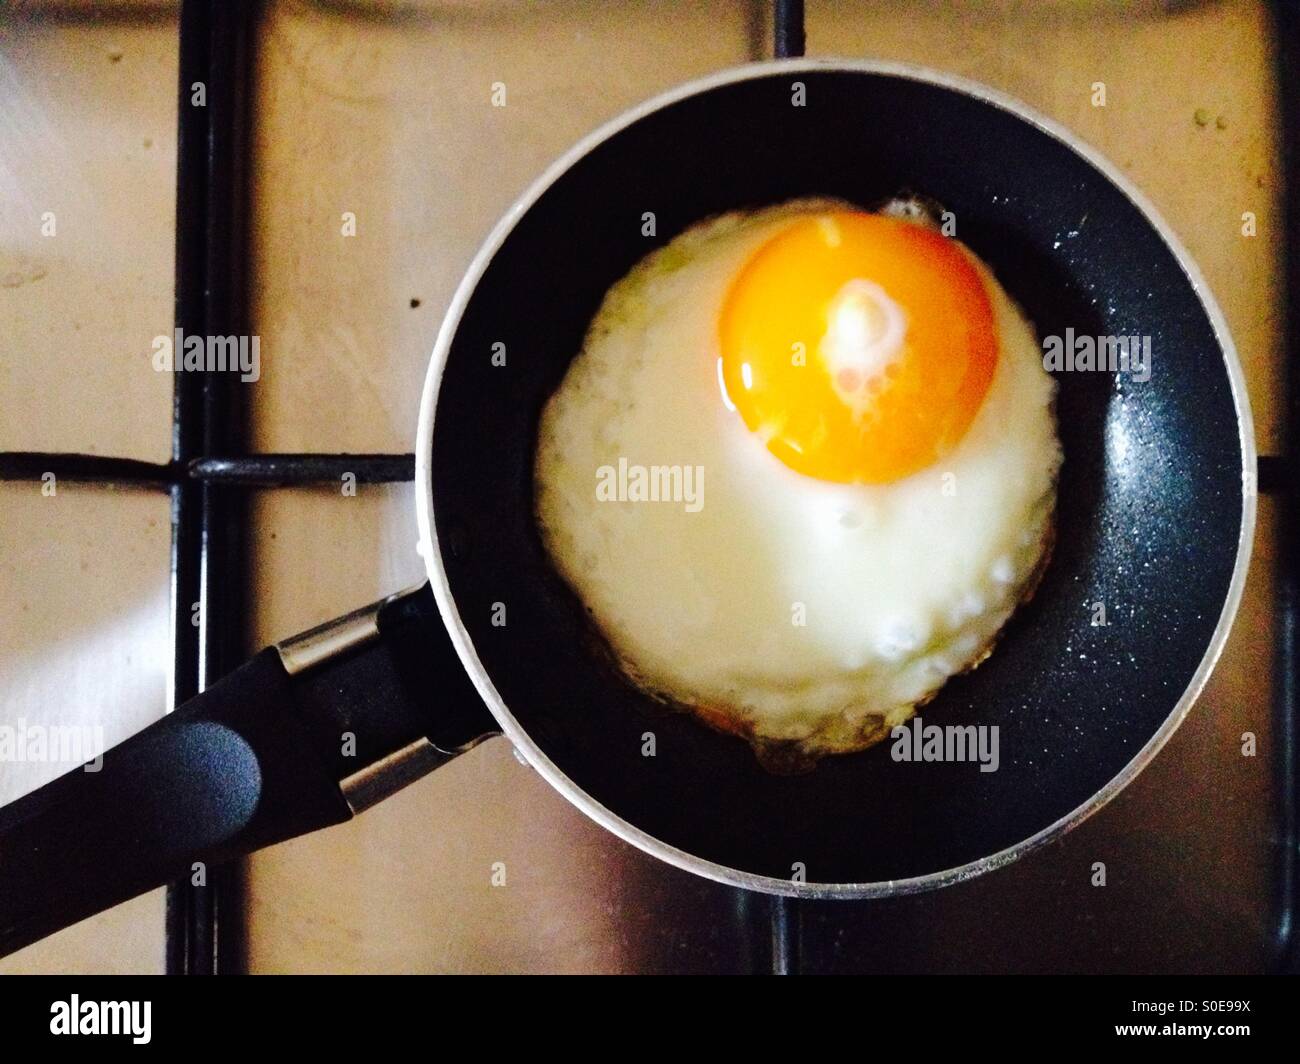 https://c8.alamy.com/comp/S0E99X/organic-free-range-fried-egg-in-single-egg-frying-pan-S0E99X.jpg